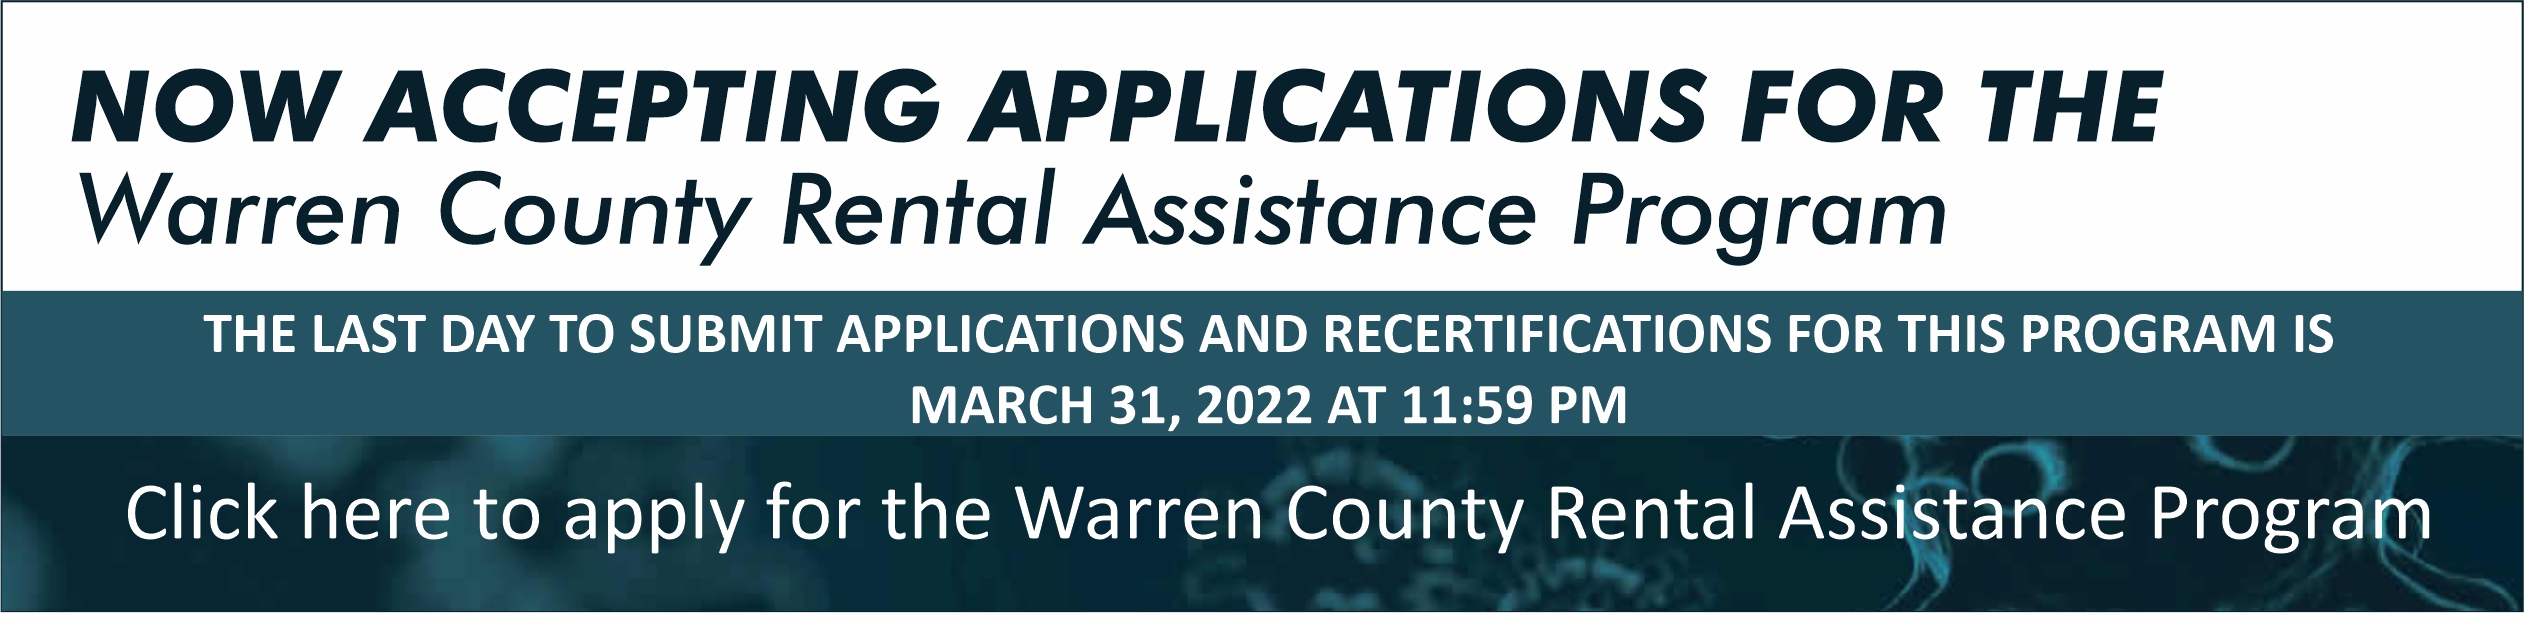 Warren County Rental Assistance Program